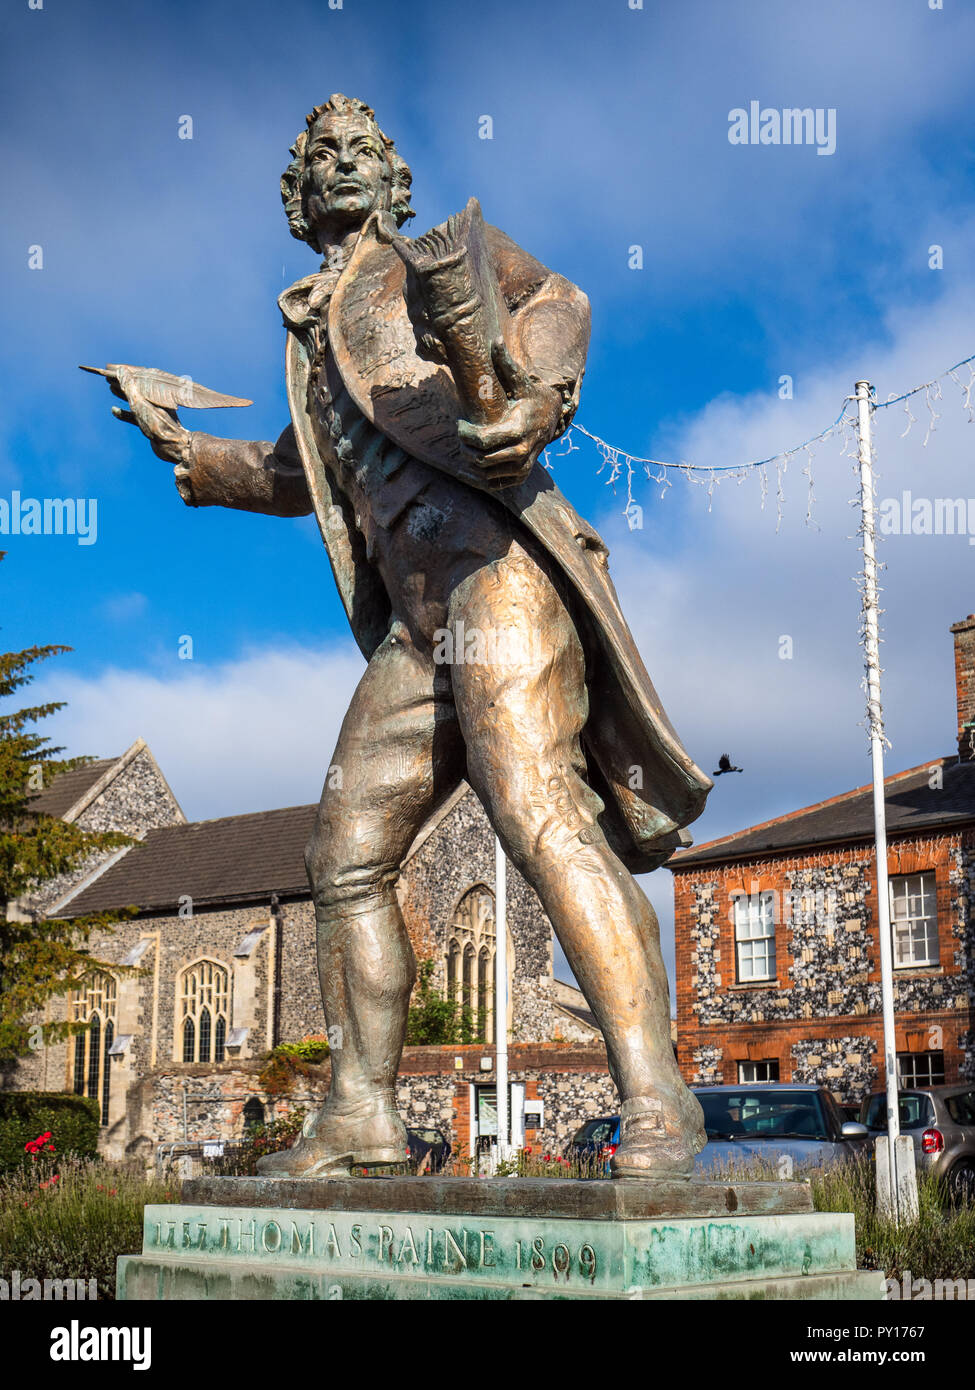 Thomas Paine Thetford - Statua di Thomas Paine uno dei padri fondatori degli Stati Uniti d'America - Nato a Thetford Regno Unito Norfolk - Scultore Sir Charles Thomas Wheeler Foto Stock